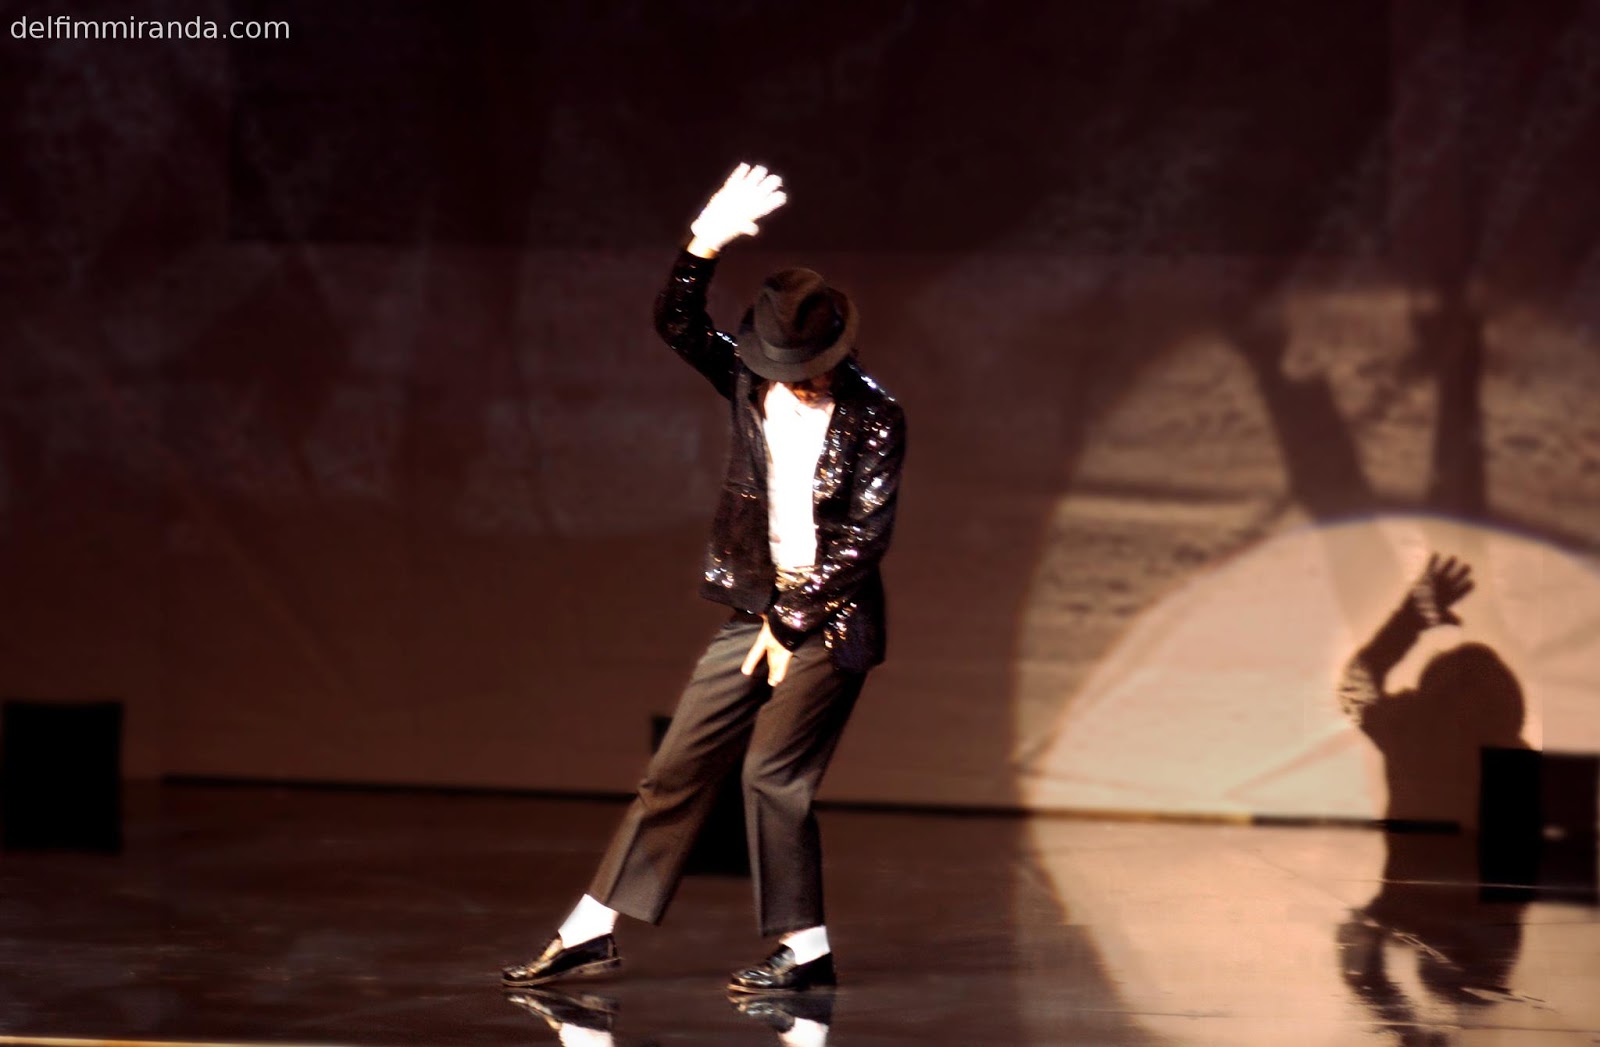 Delfim Miranda - Michael Jackson Tribute - TV Special Appearence - RTP / Freemantle